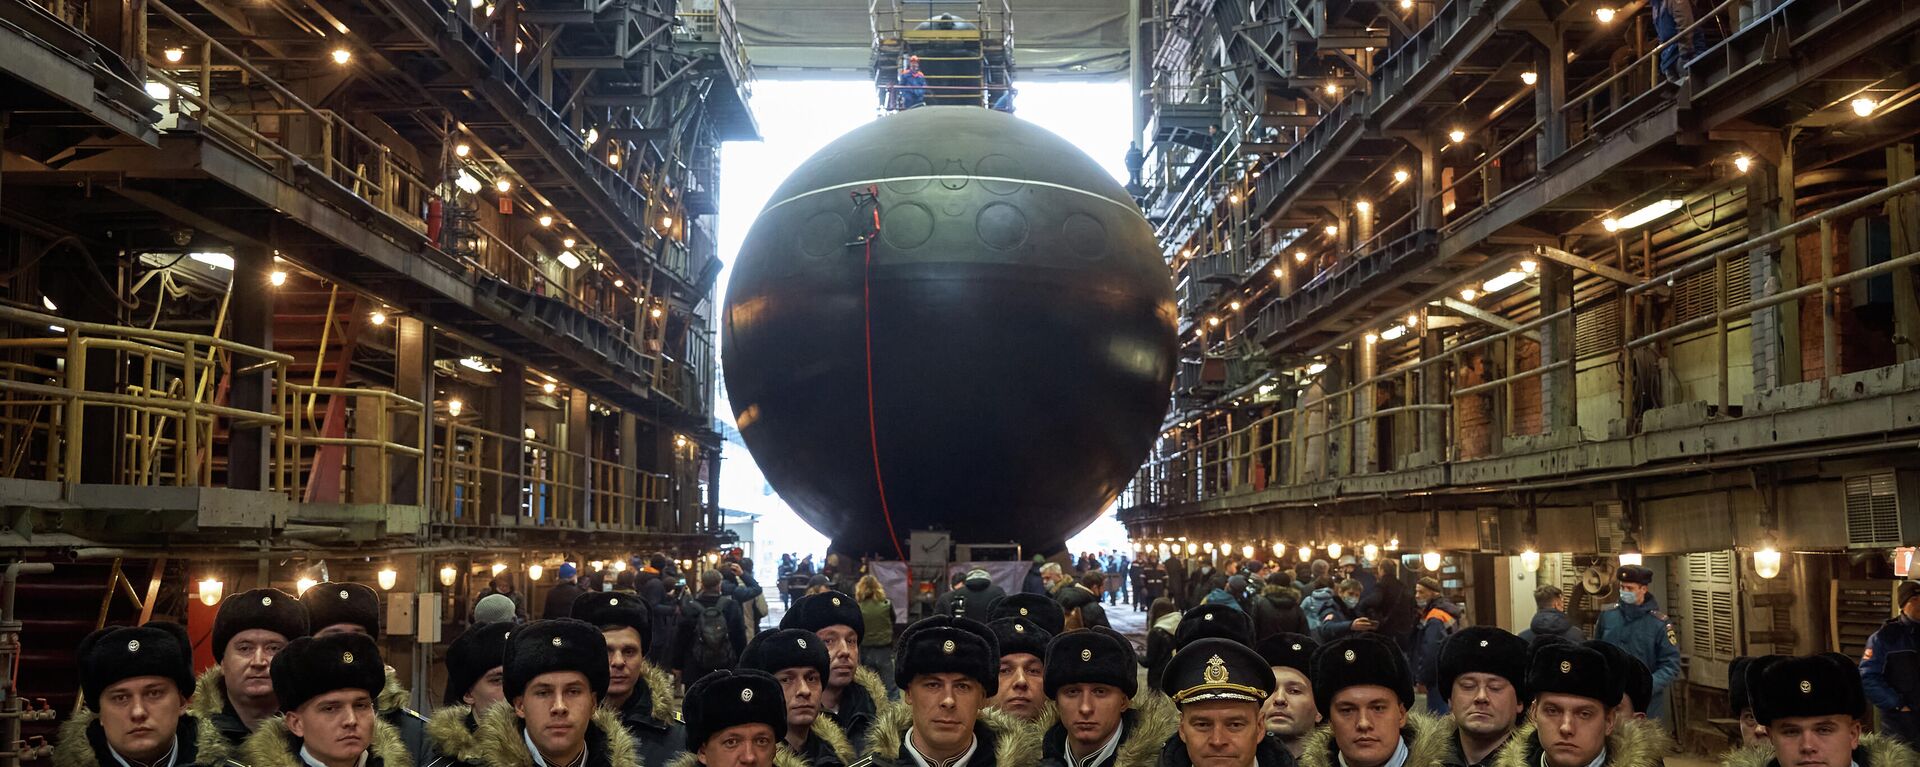 Botadura del submarino ruso Magadan - Sputnik Mundo, 1920, 28.03.2021